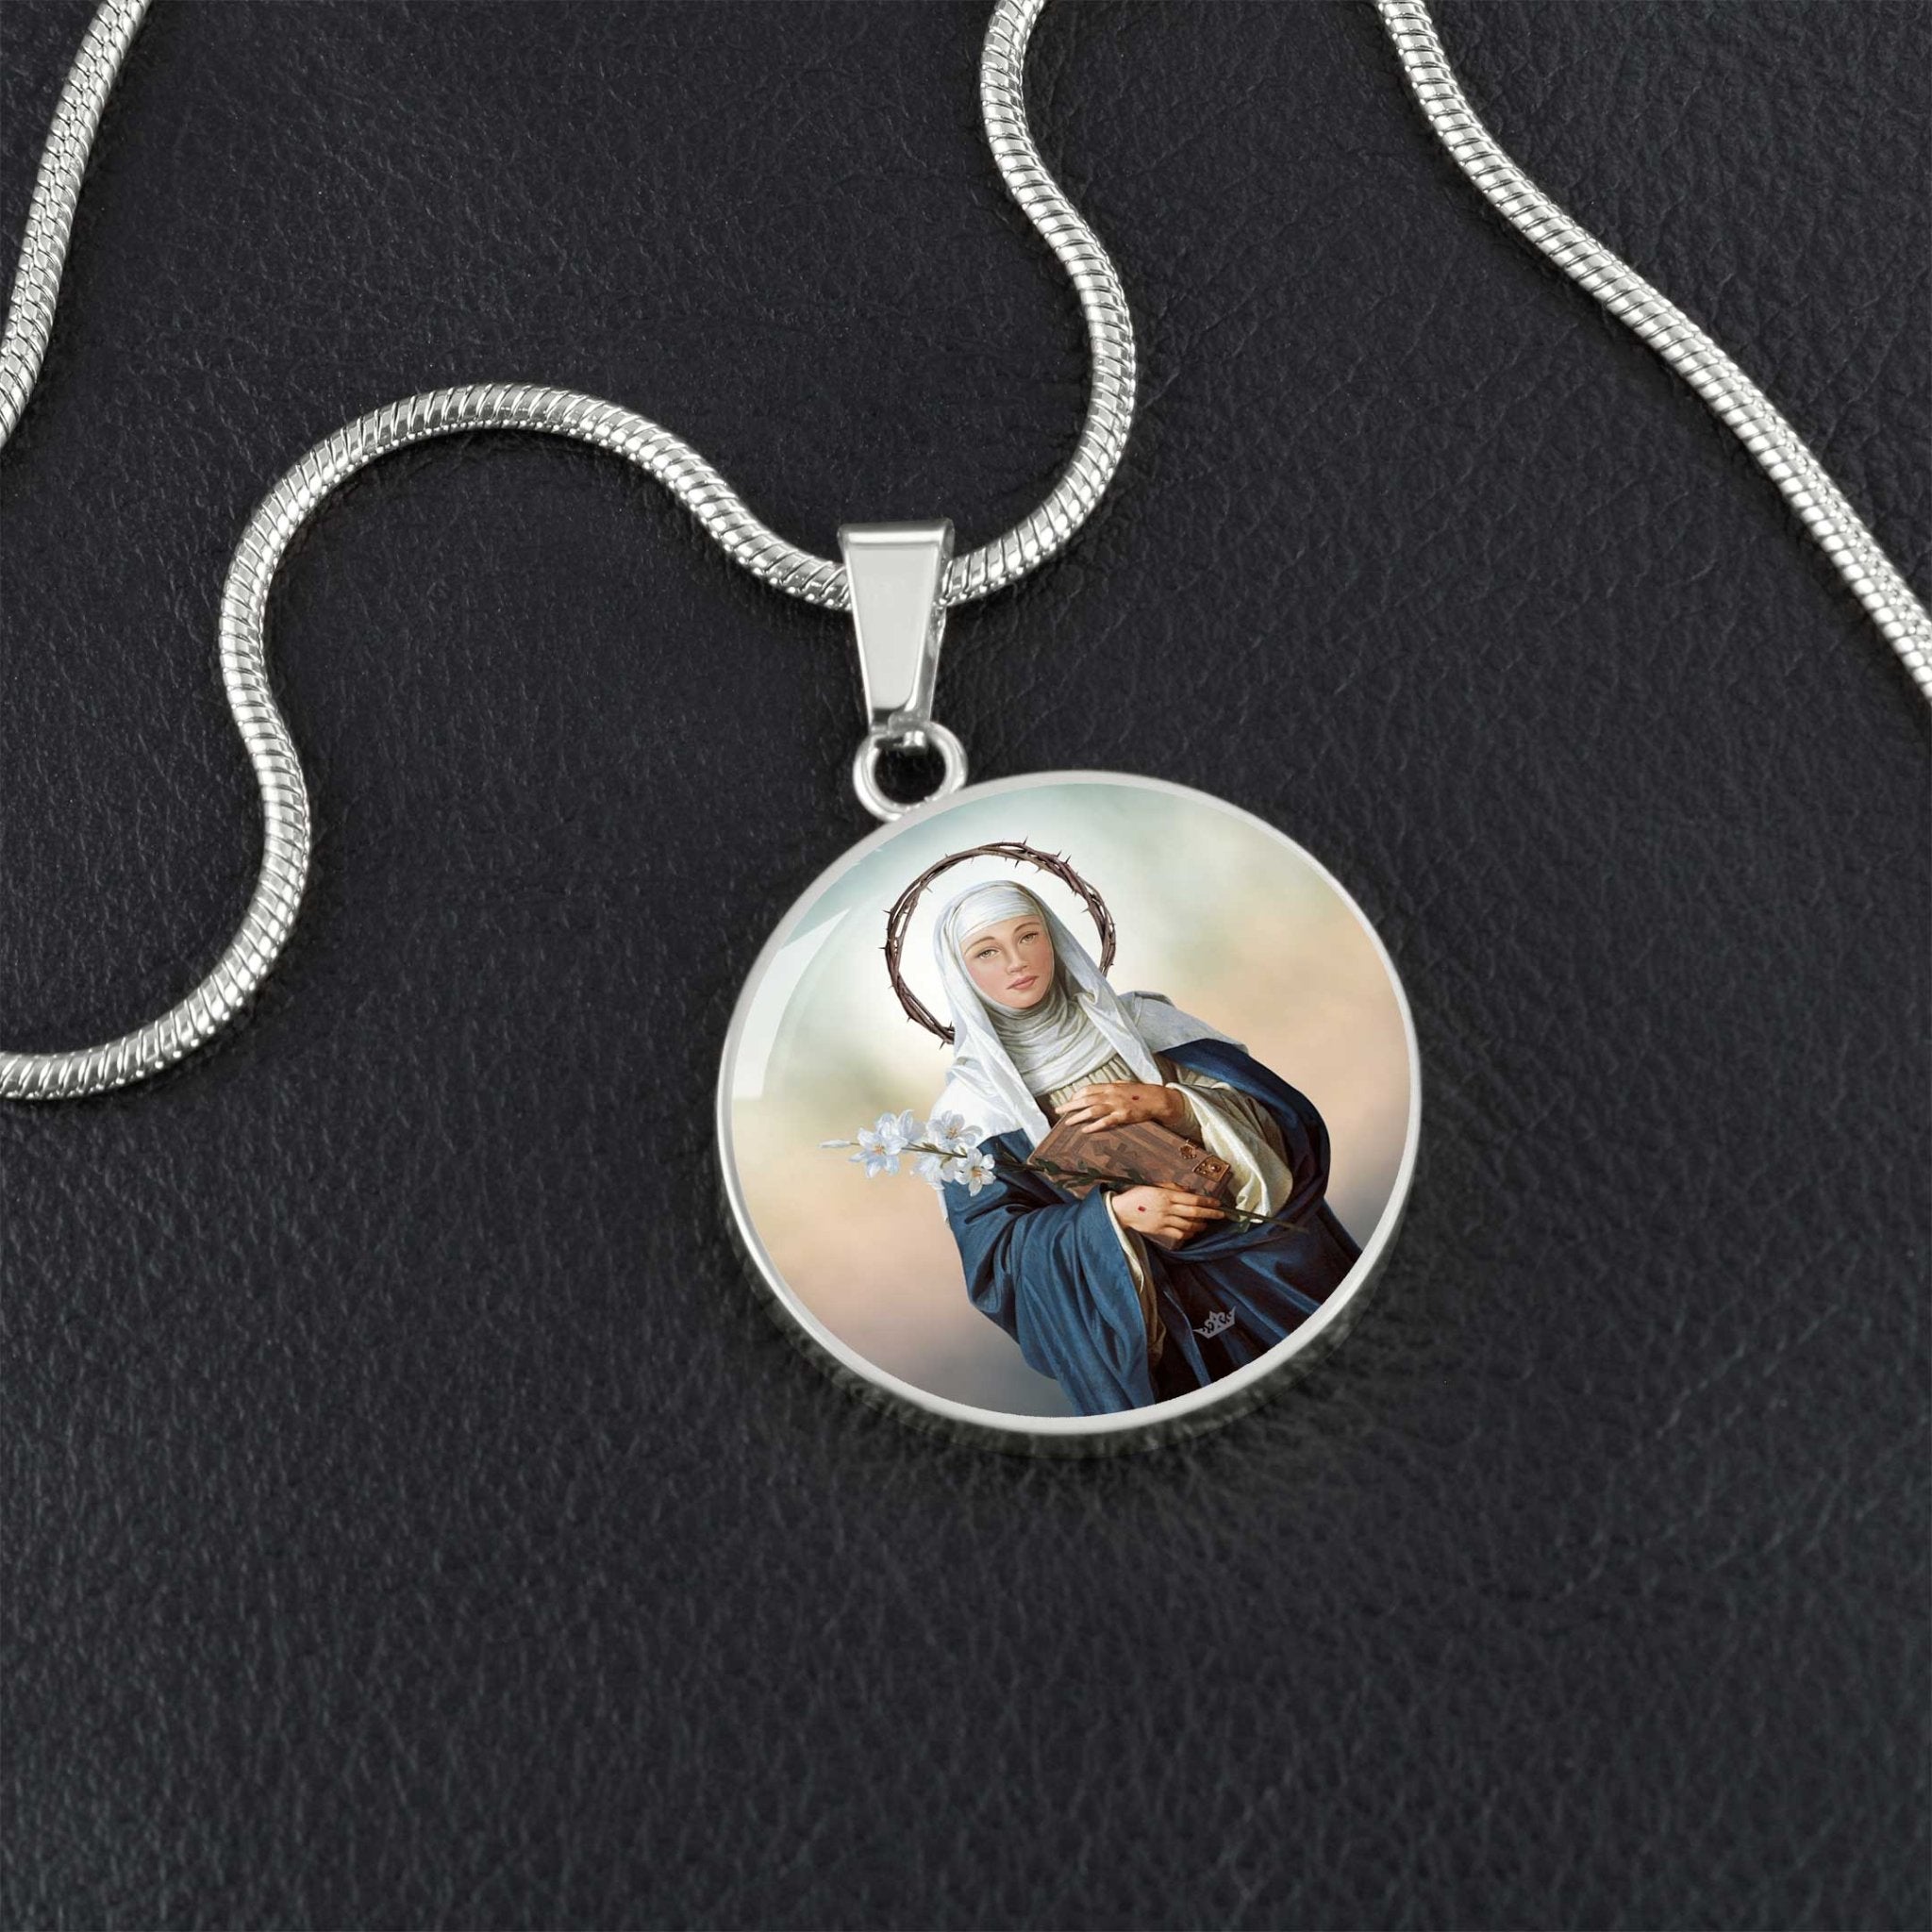 St. Catherine of Siena Pendant Necklace - VENXARA®